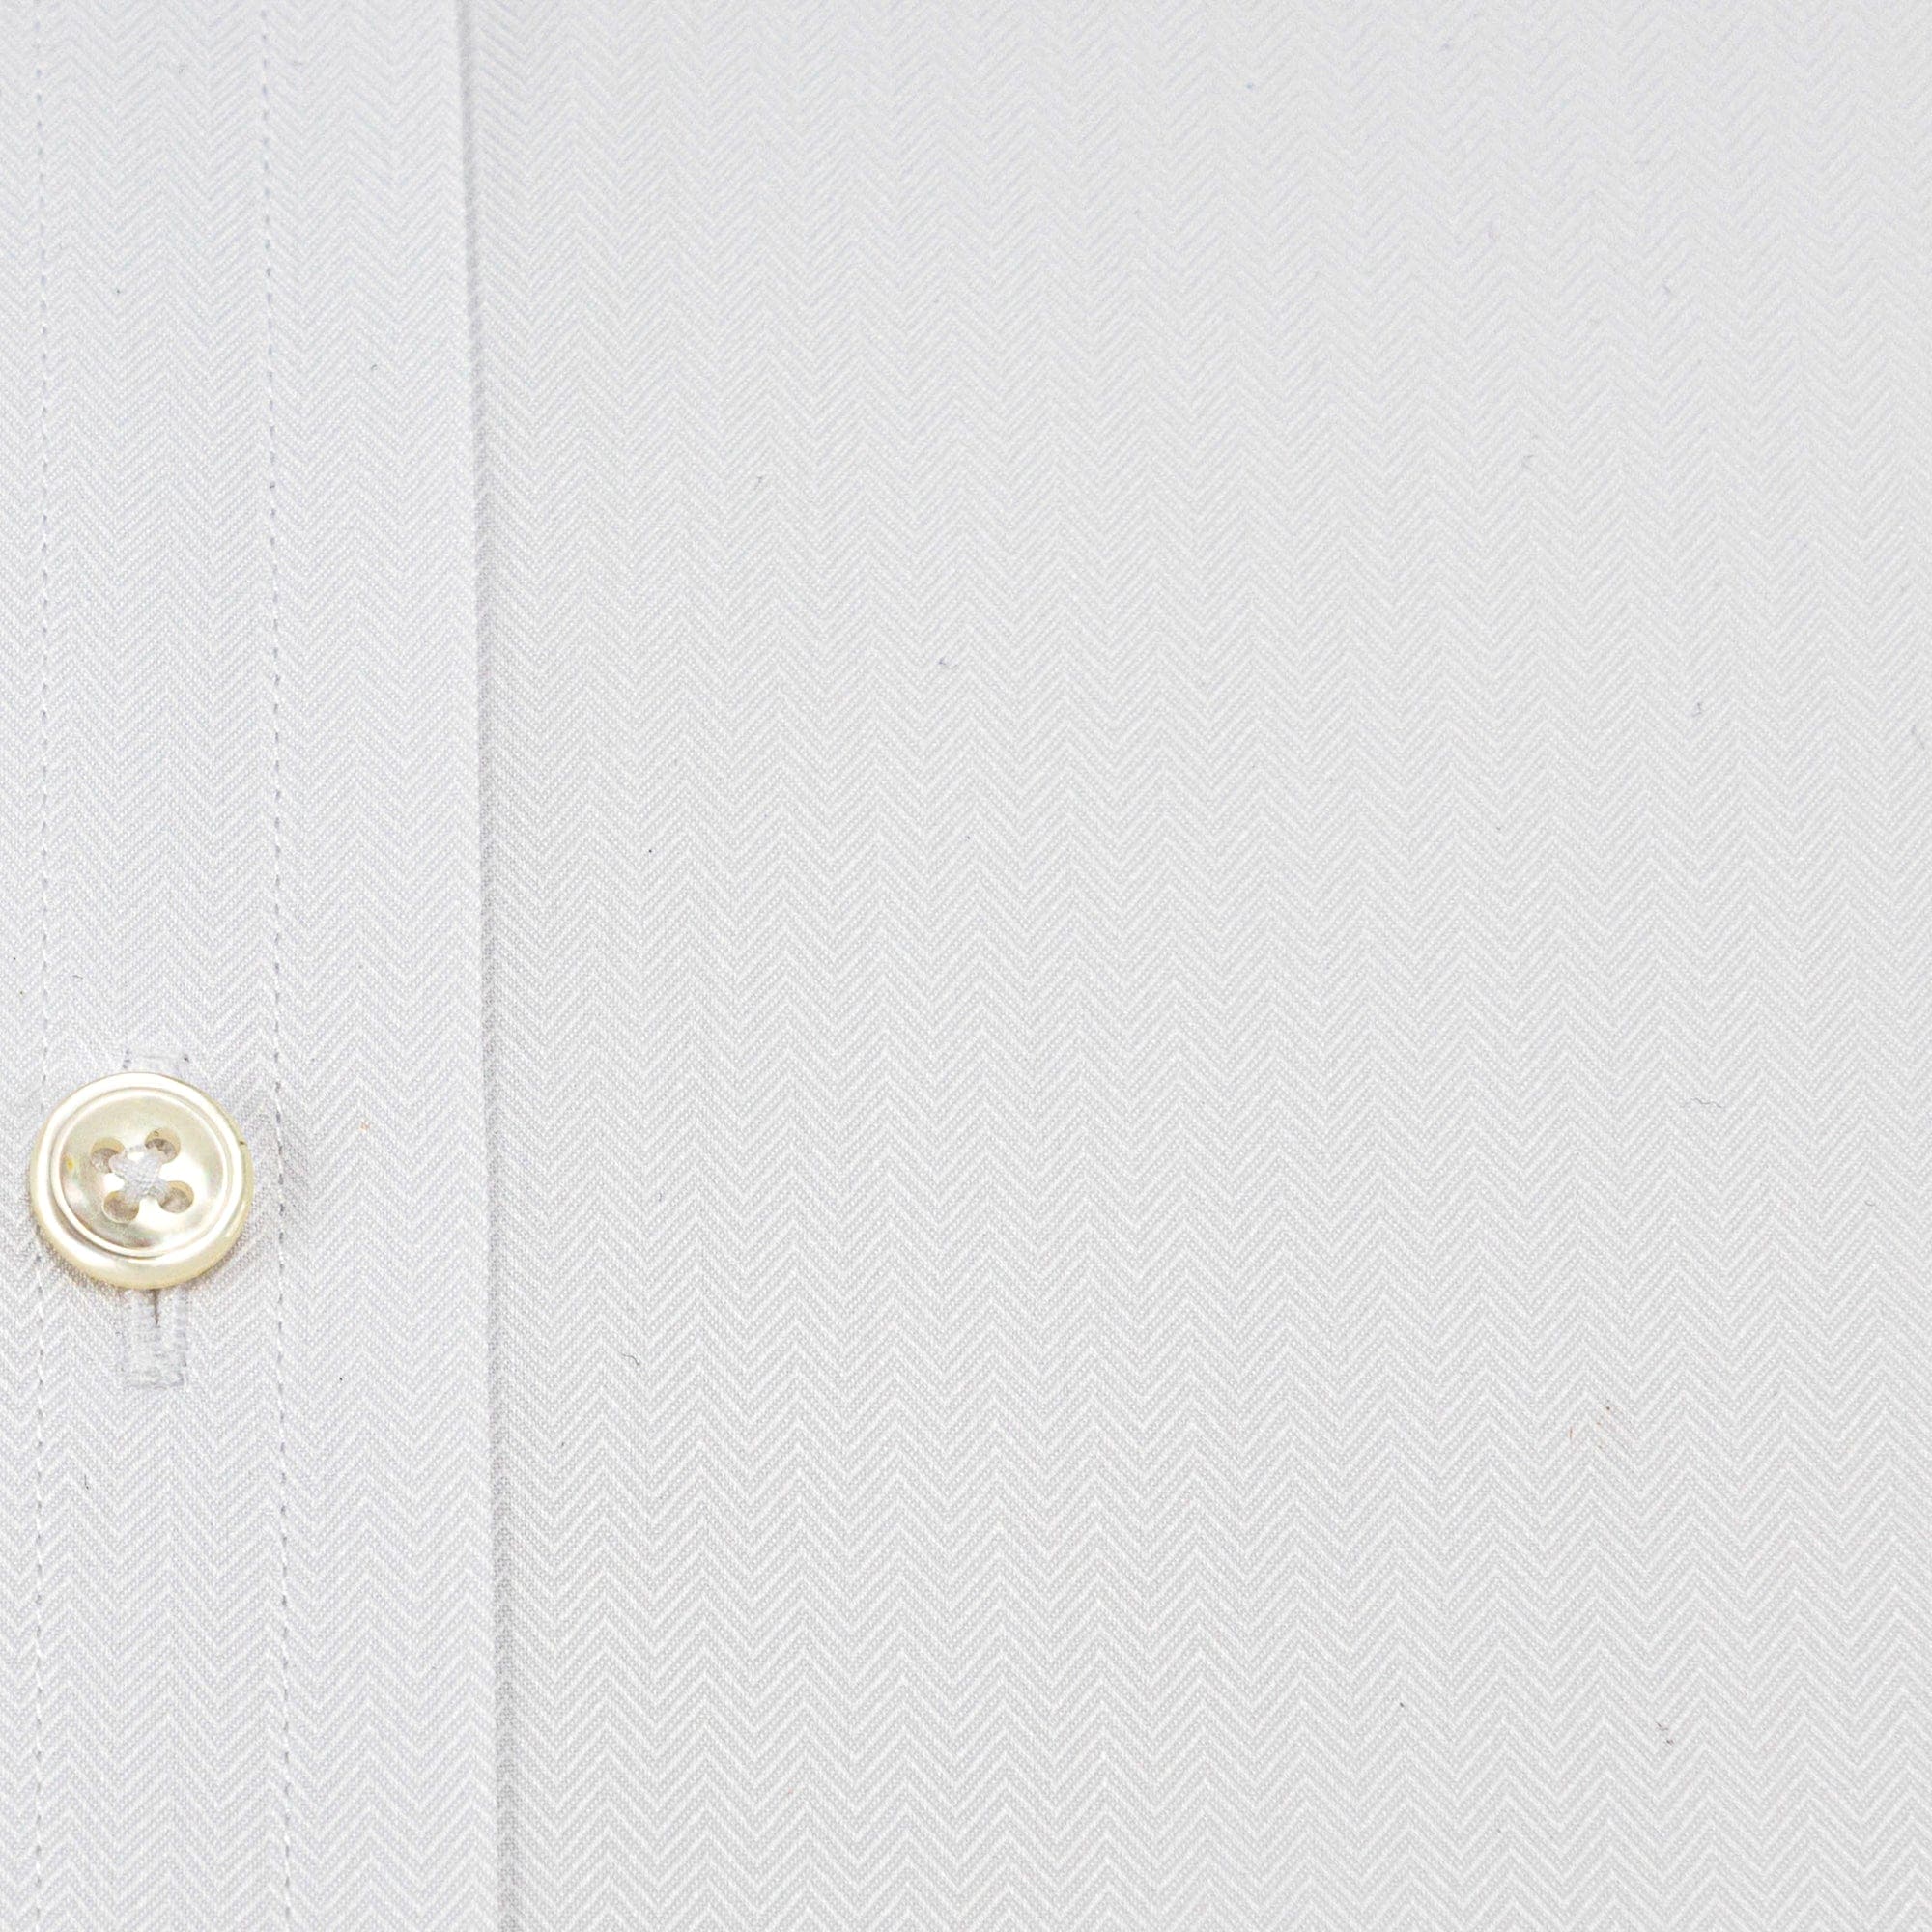 Classic Fit, Classic Collar, Two Button Cuff Shirt in a White Herringbone Cotton